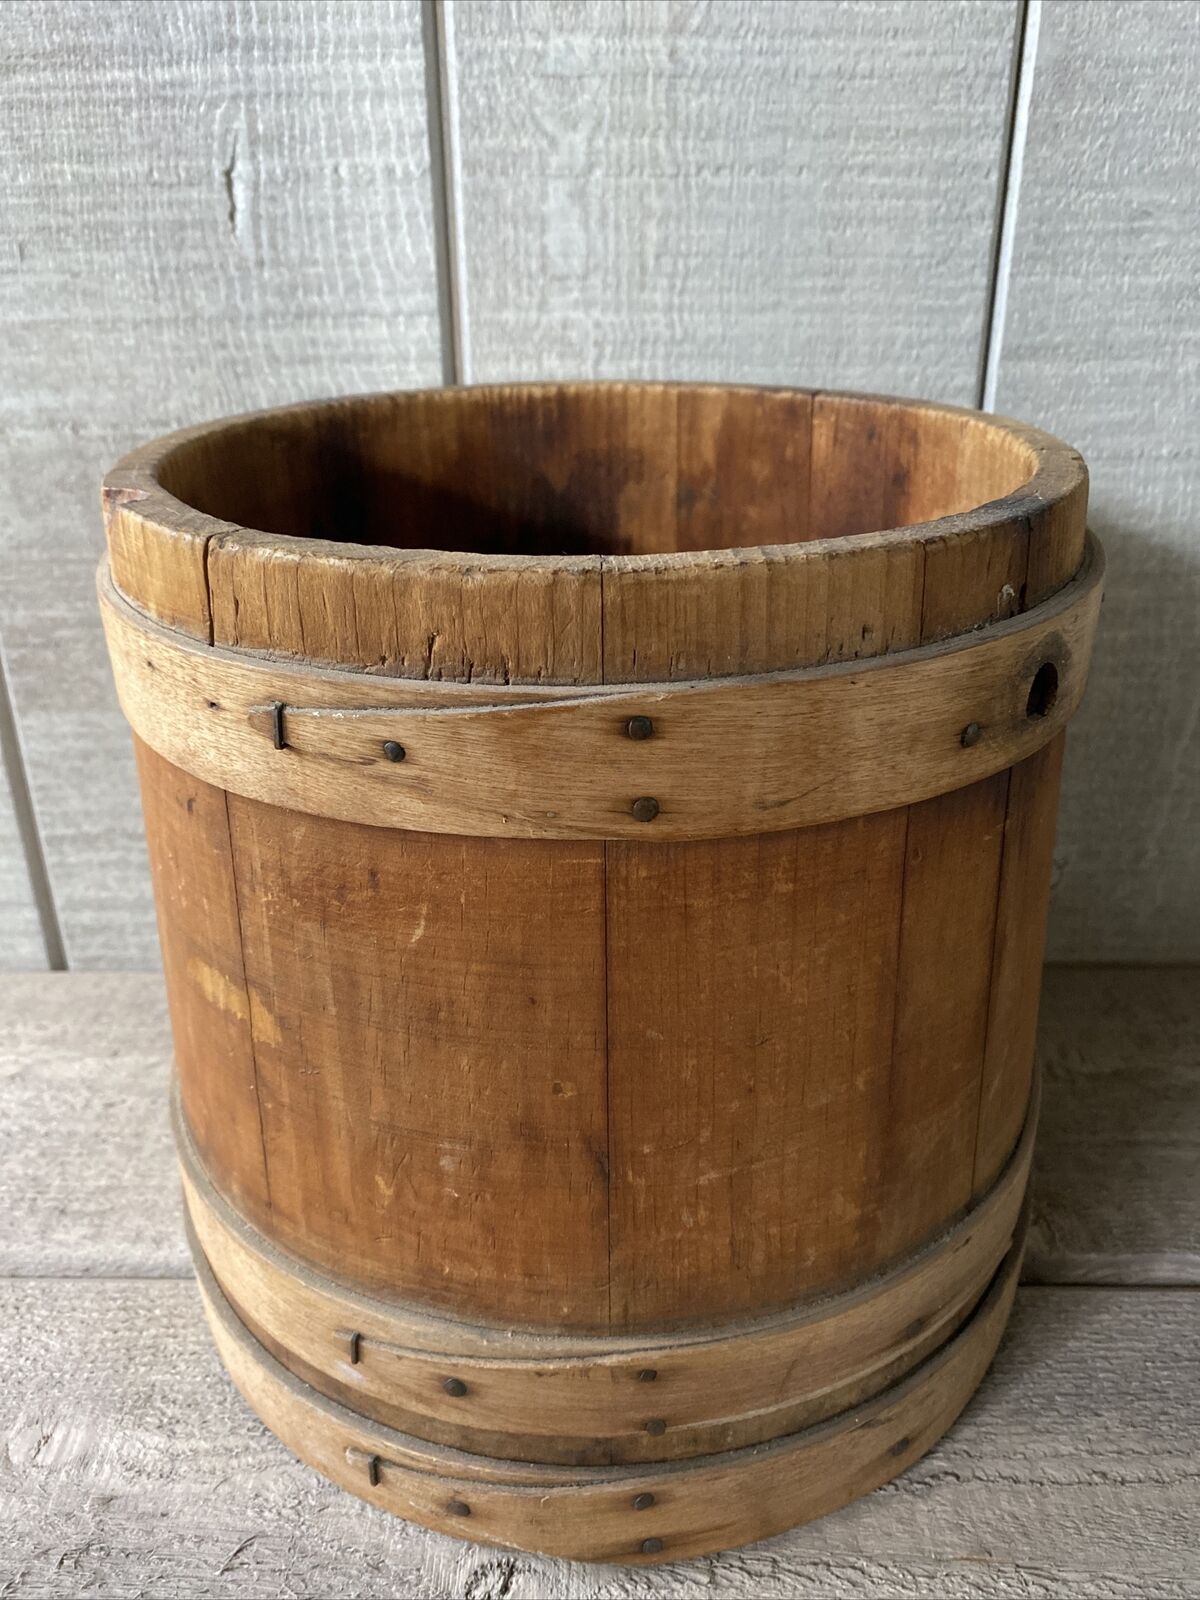 Antique Wood Sugar Bucket Firkin no Handle or Lid 9.5” X 9”